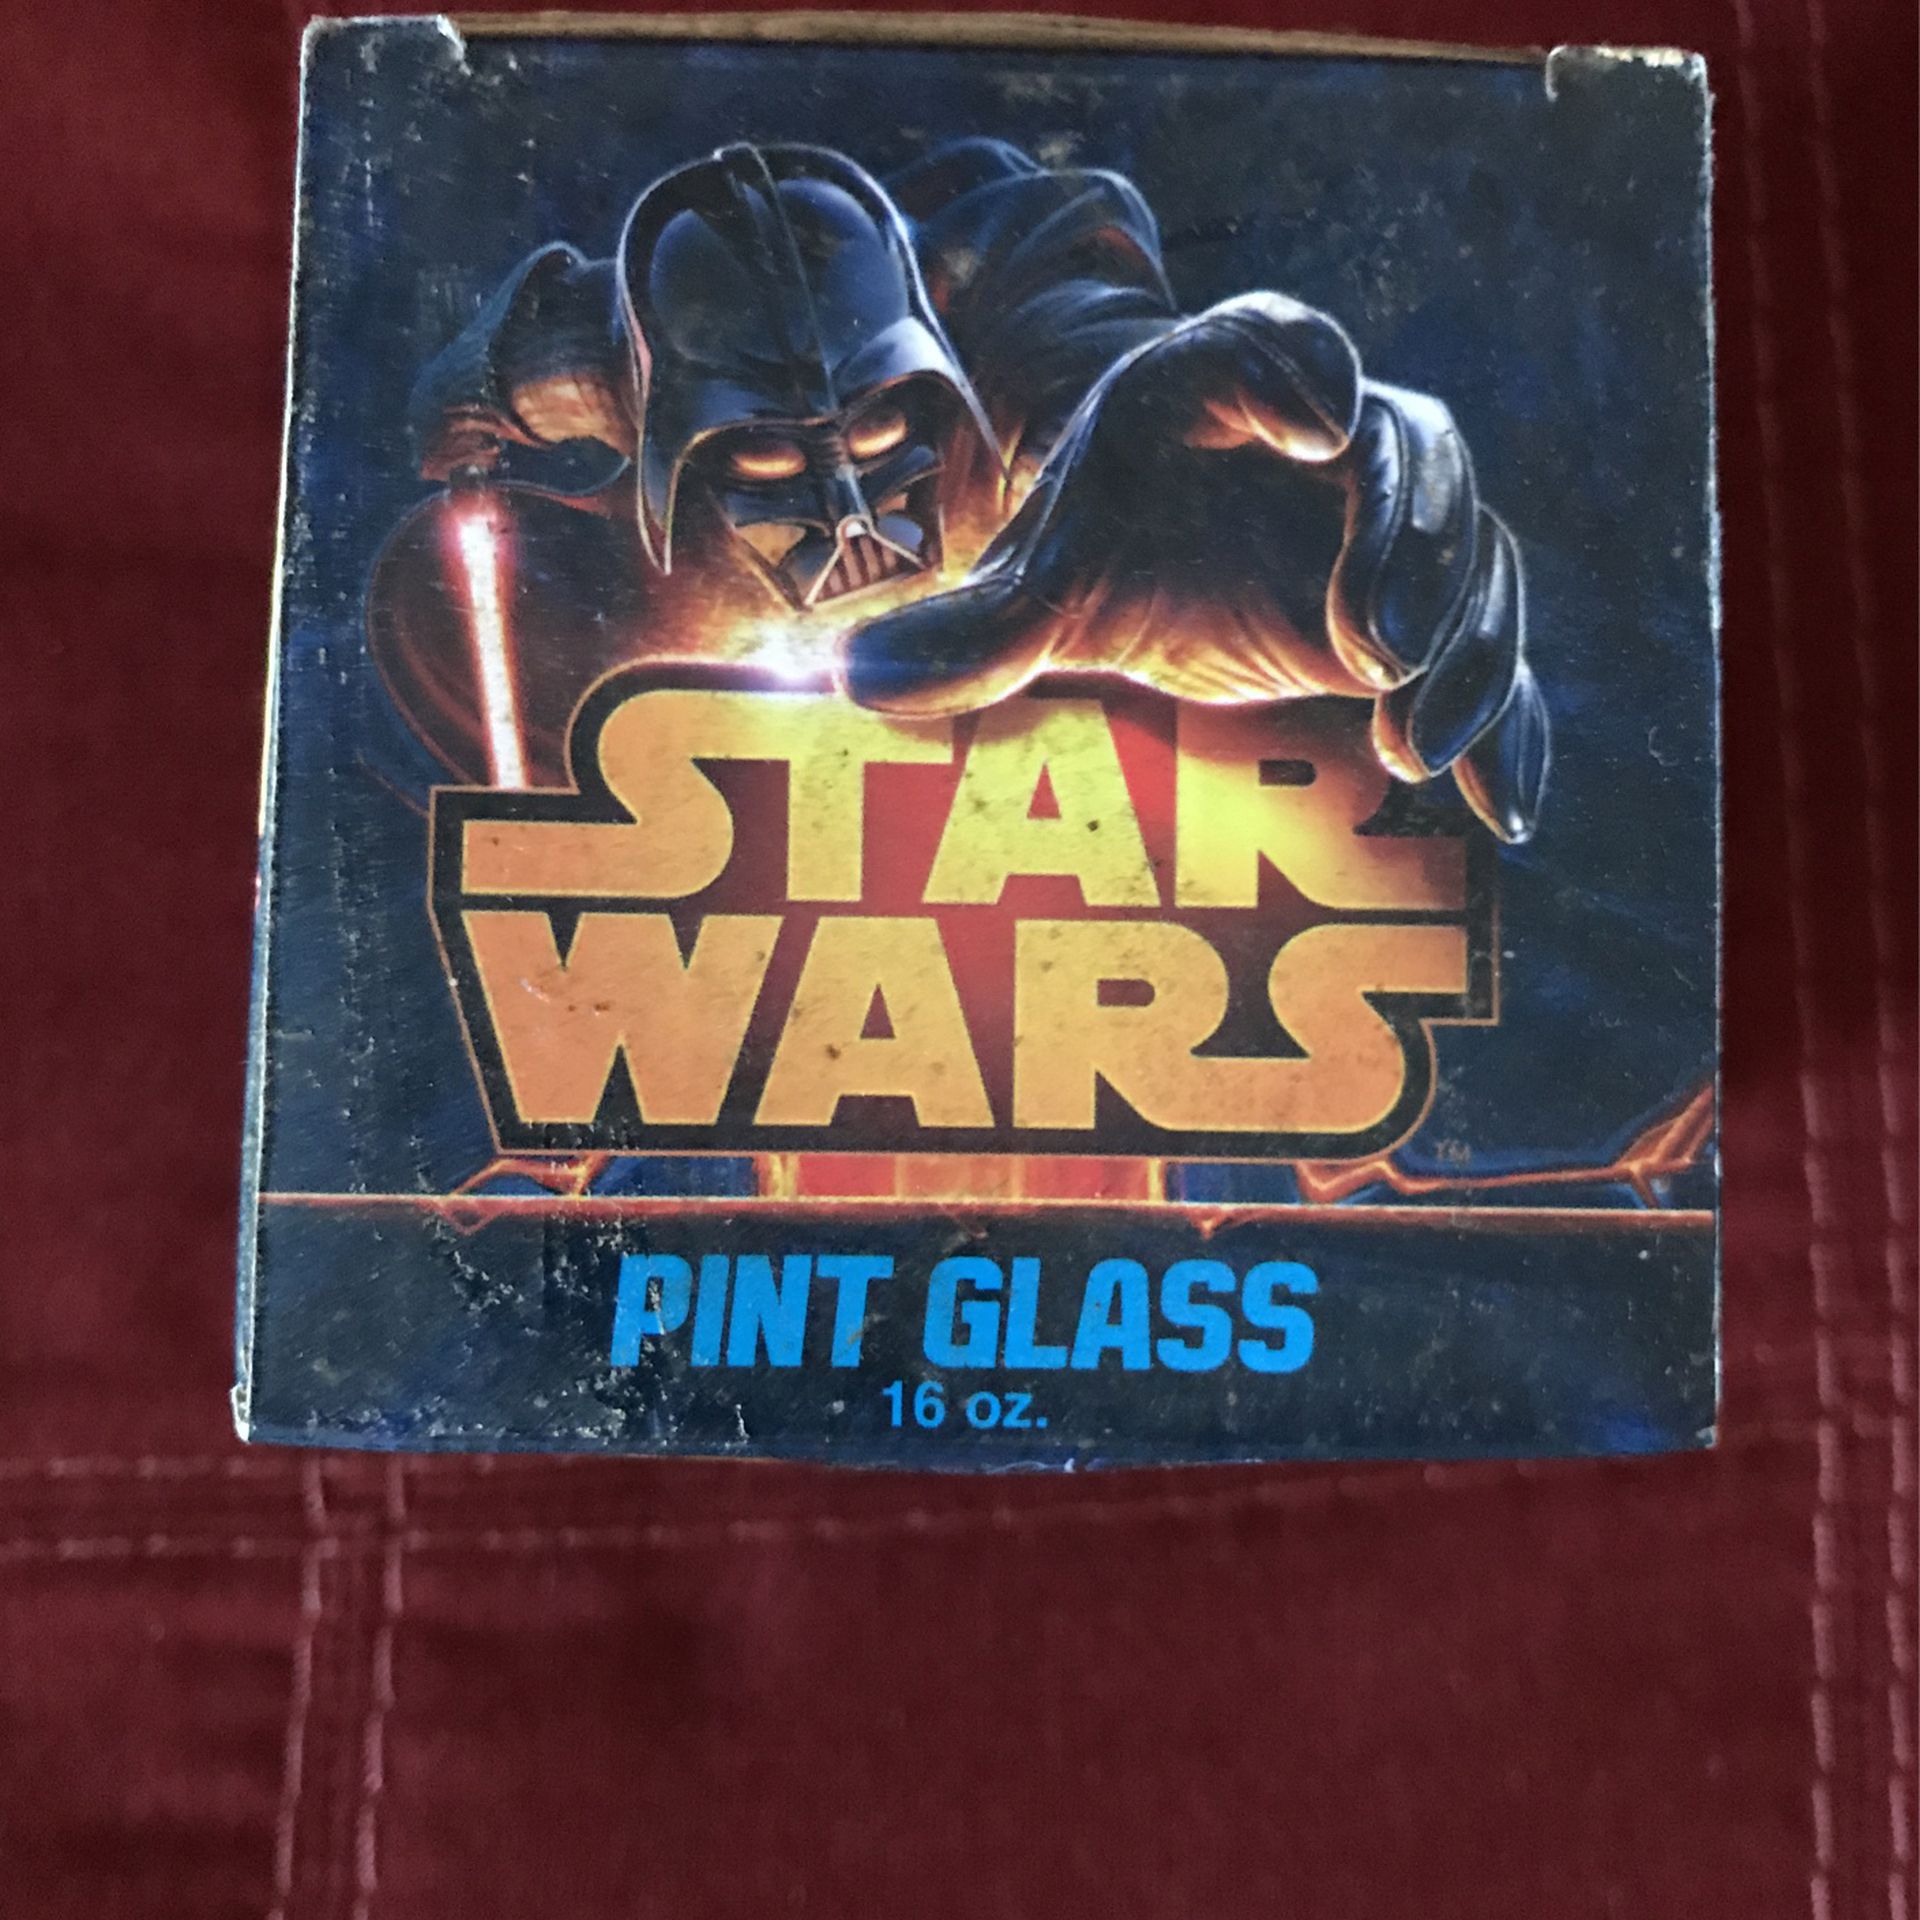 Star Wars Boba Fett pint glass